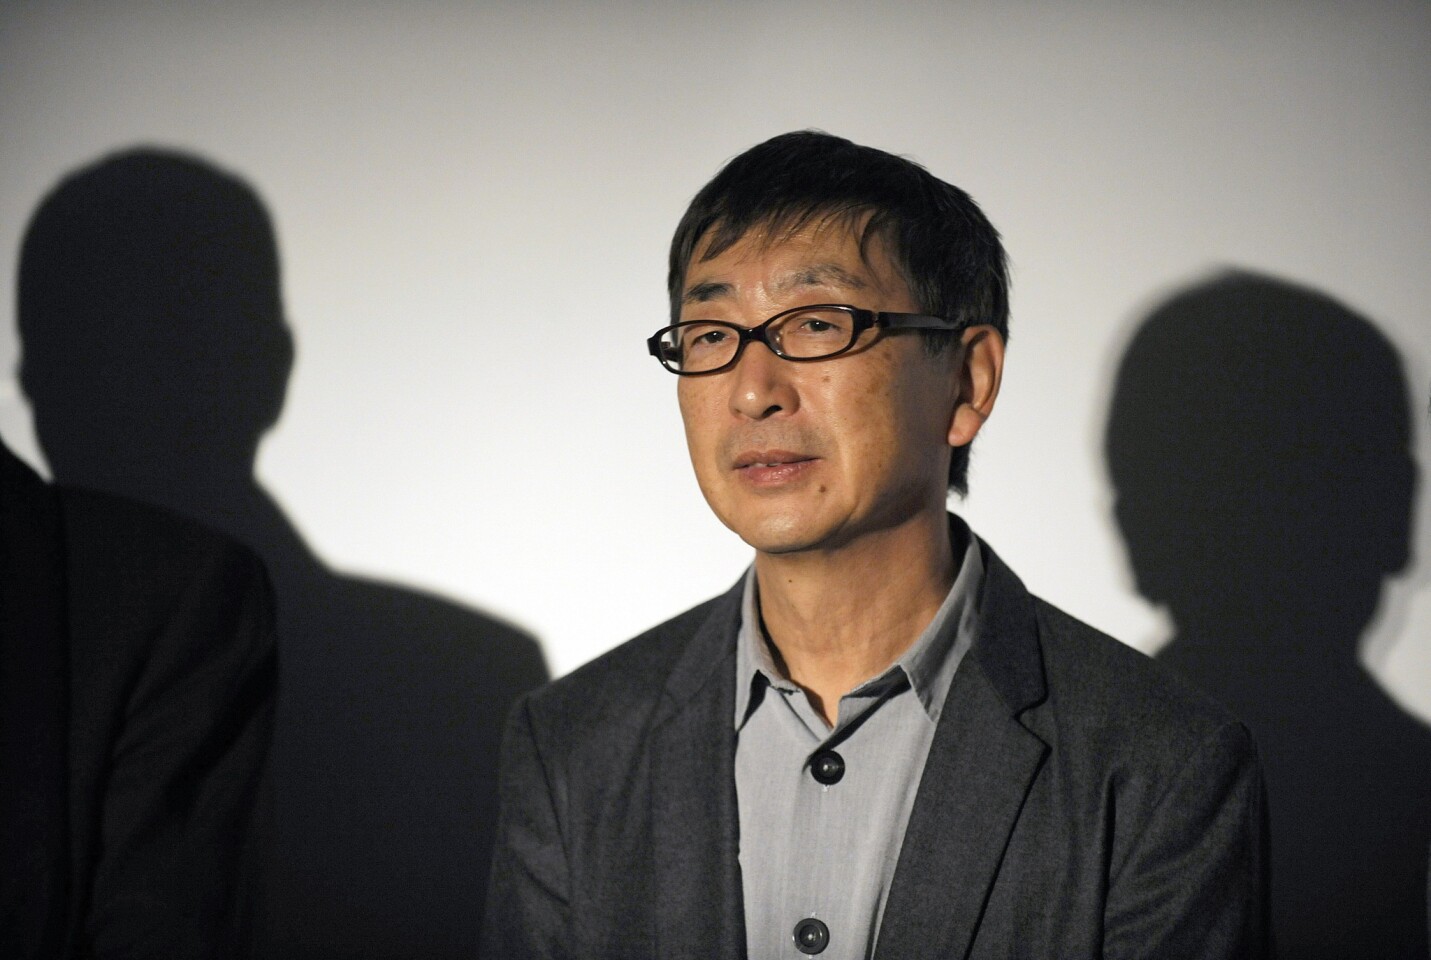 Toyo Ito, seen in 2009, won the Pritzker Architecture Prize in 2013.